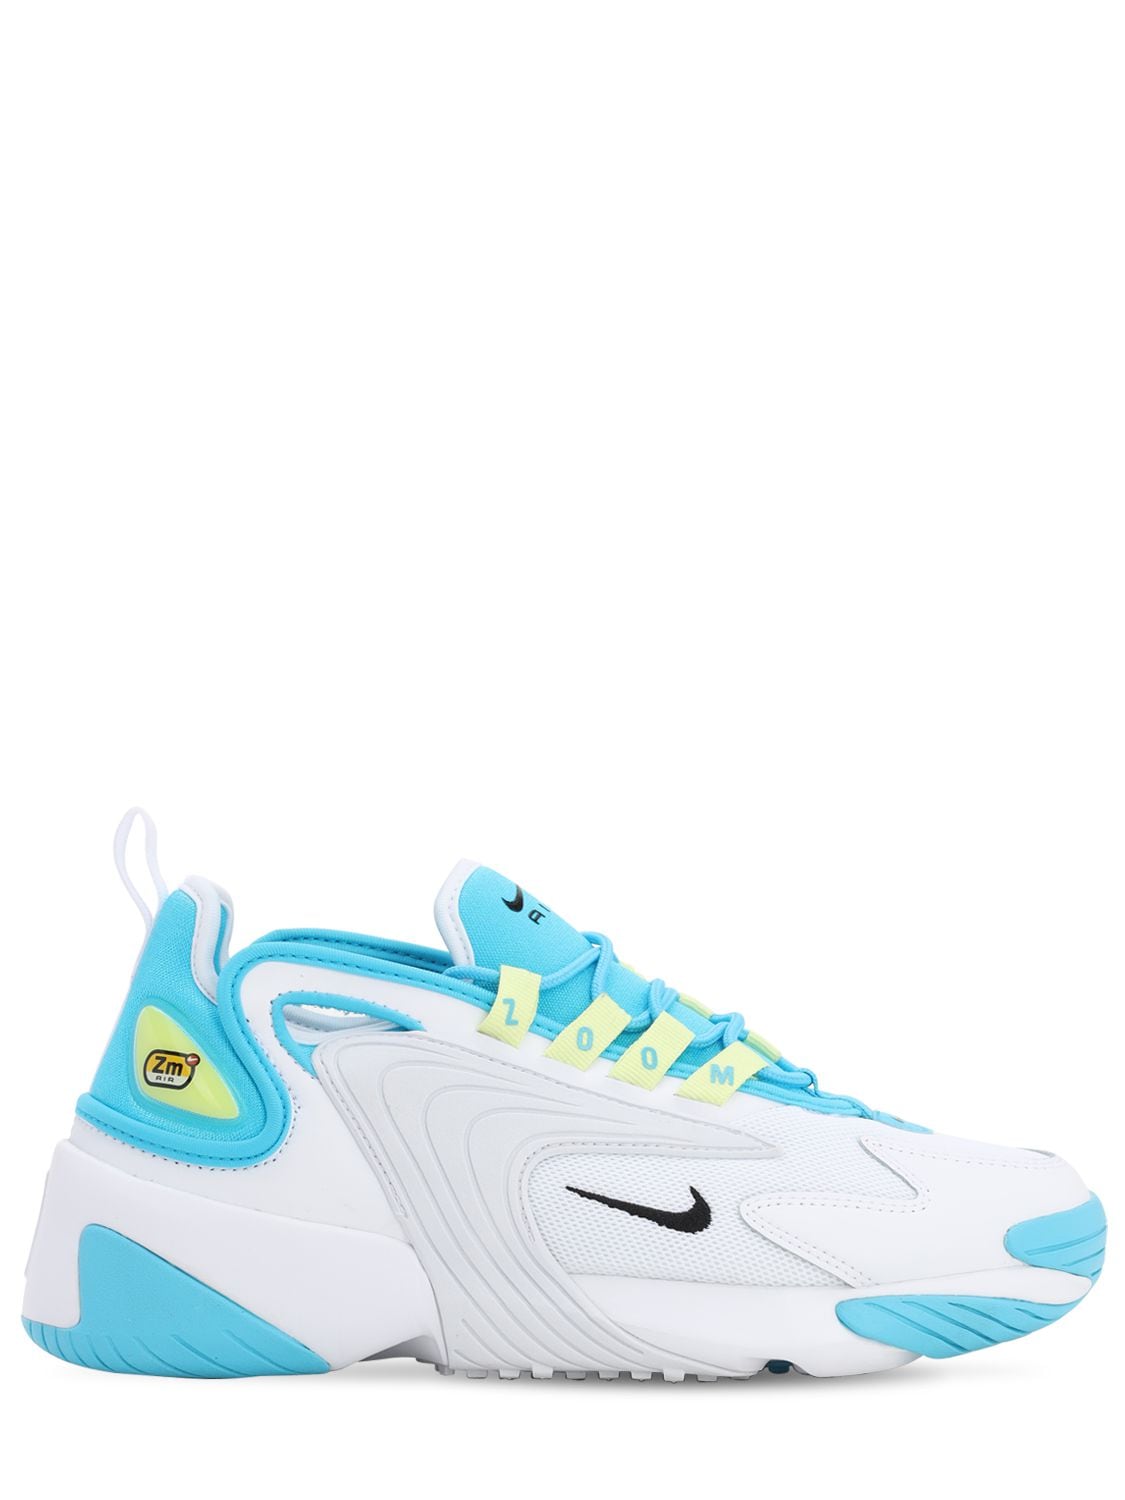 Nike Zoom 2k Sneakers In White,aqua